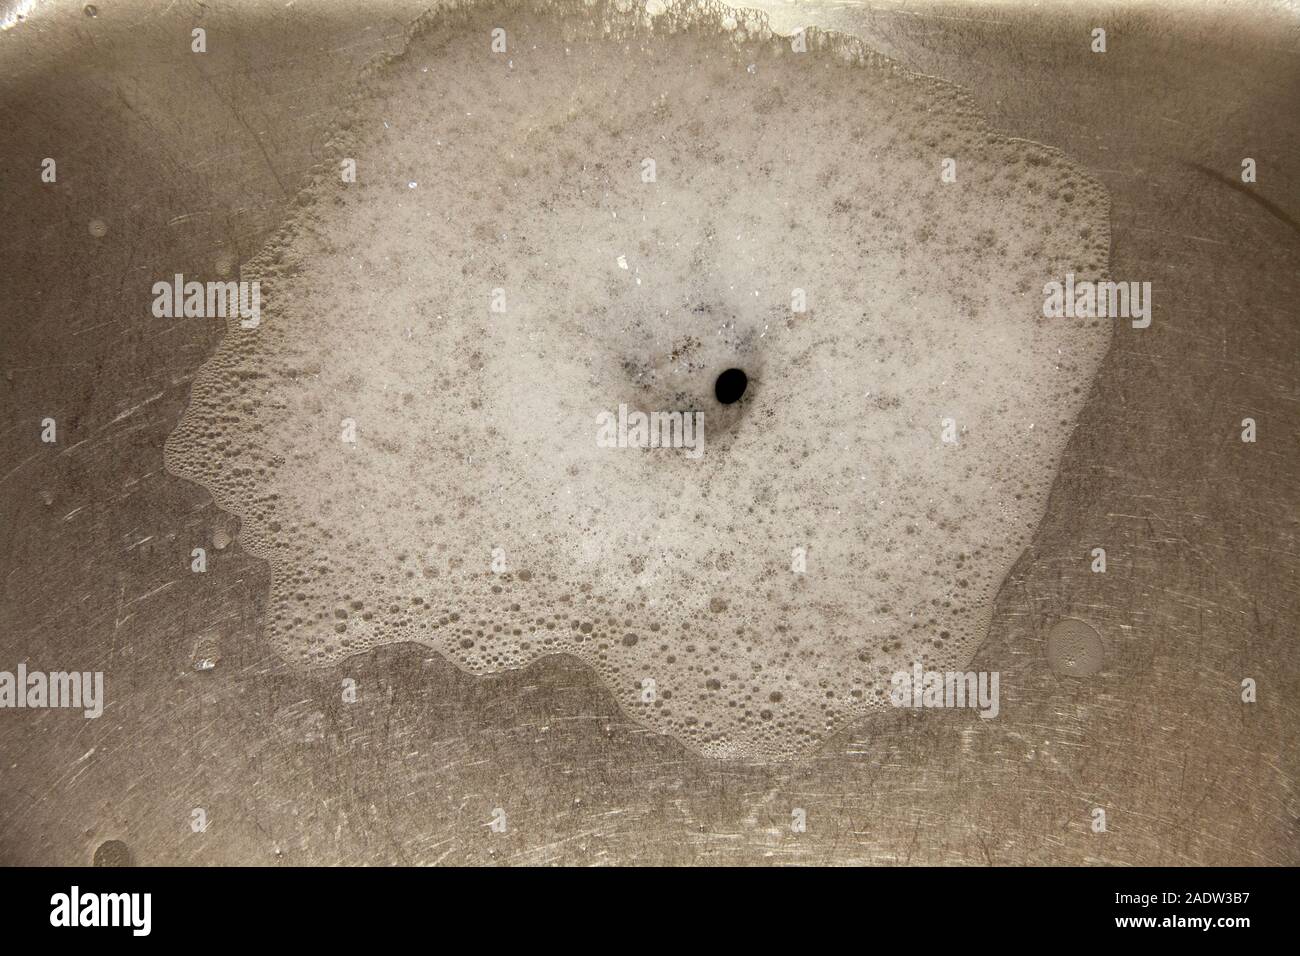 Foam Around Plughole in Sink Stock Photo